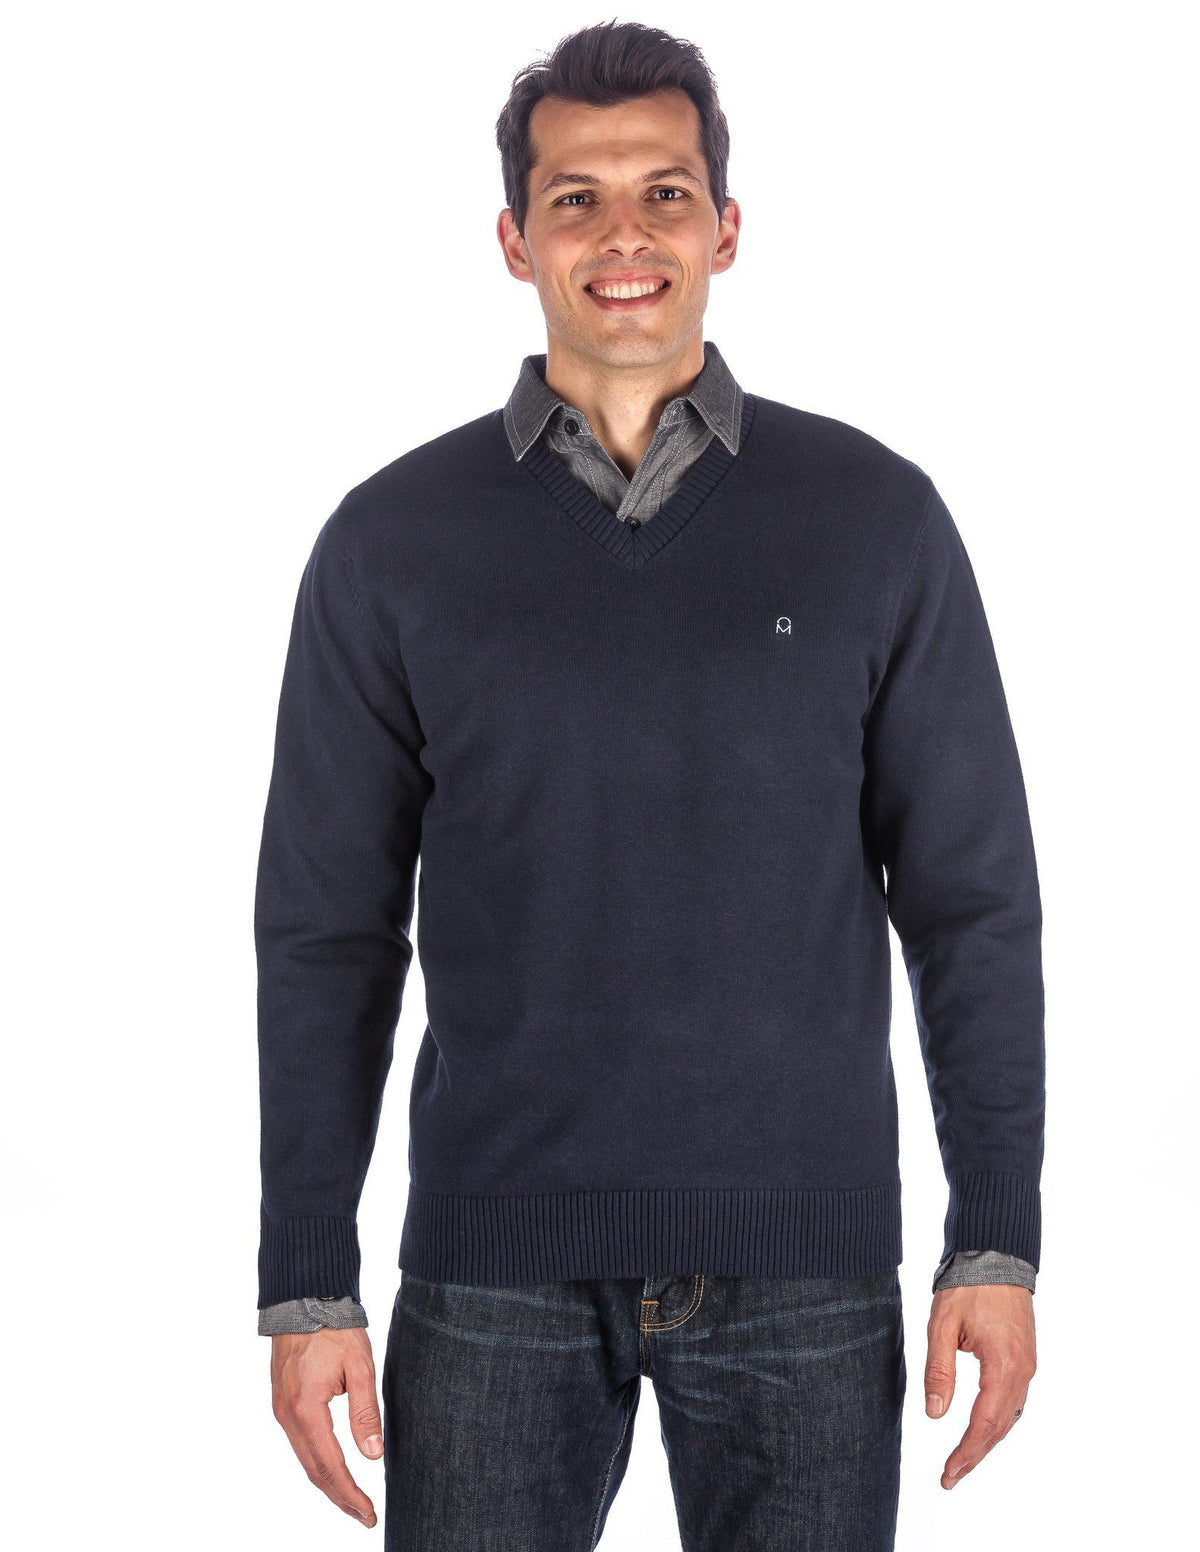 Men's 100% Cotton V-Neck Essential Sweater - Navy